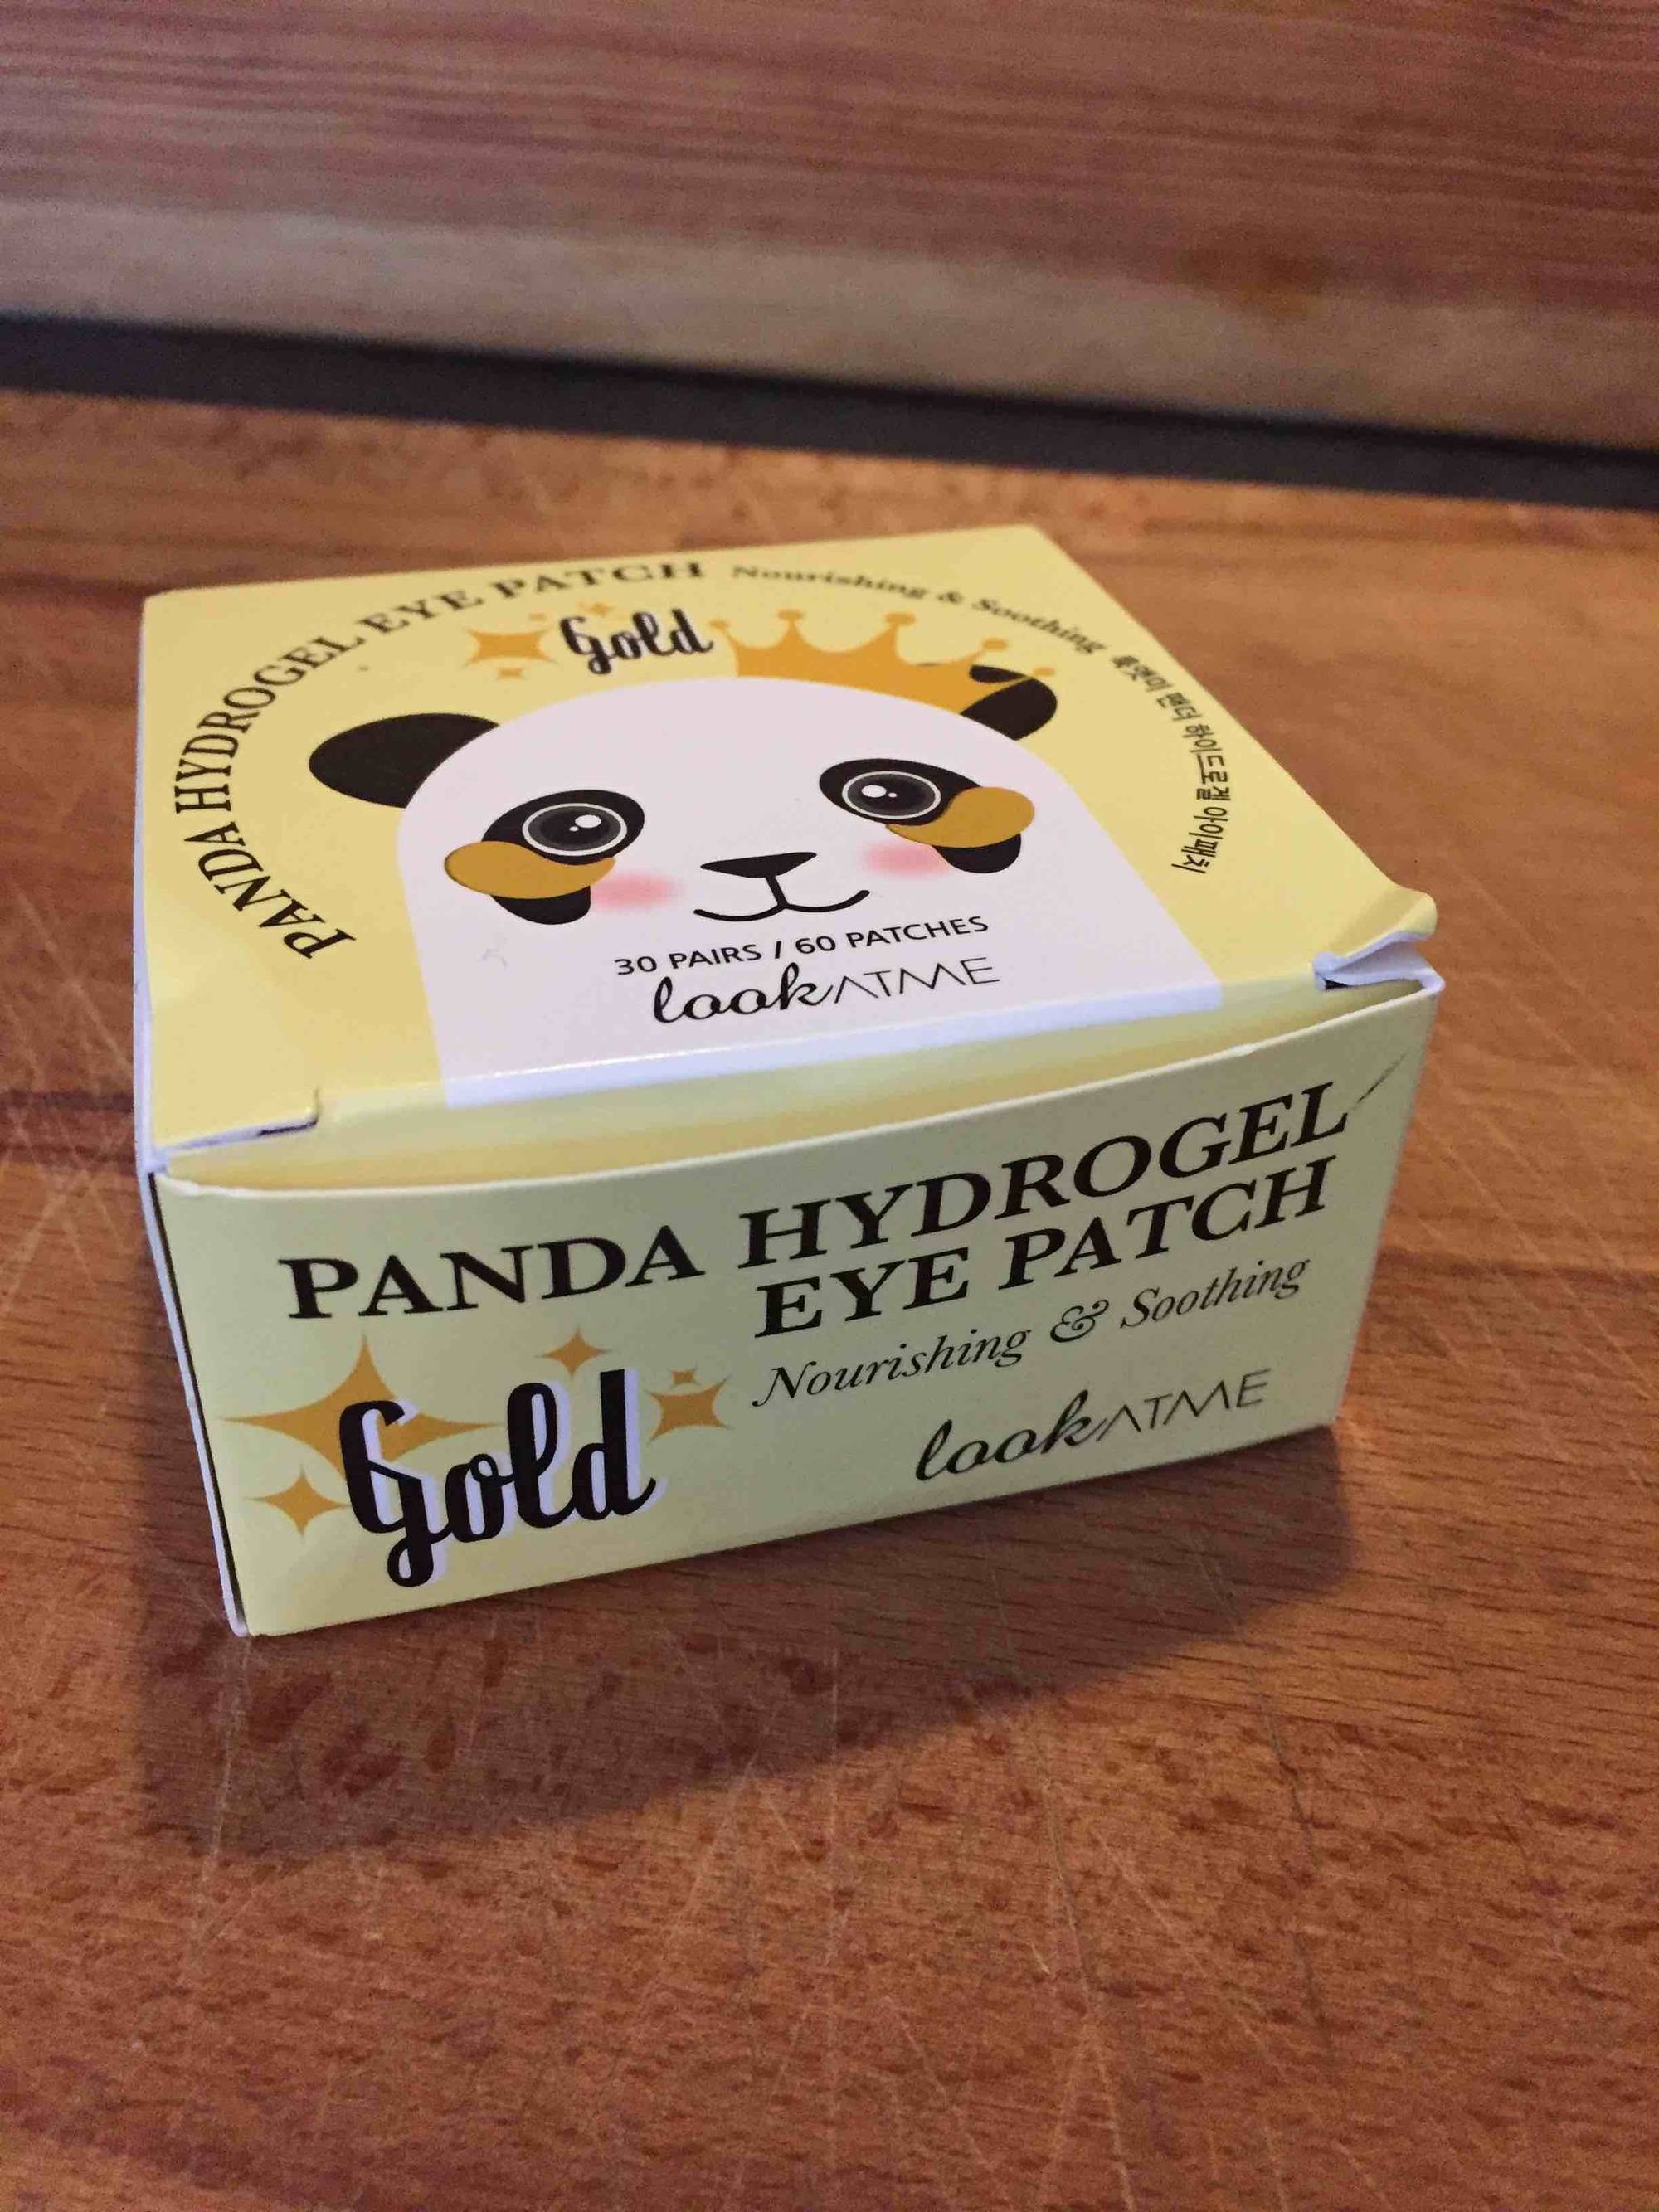 LOOK AT ME - Gold - Panda hydrogel eye patch